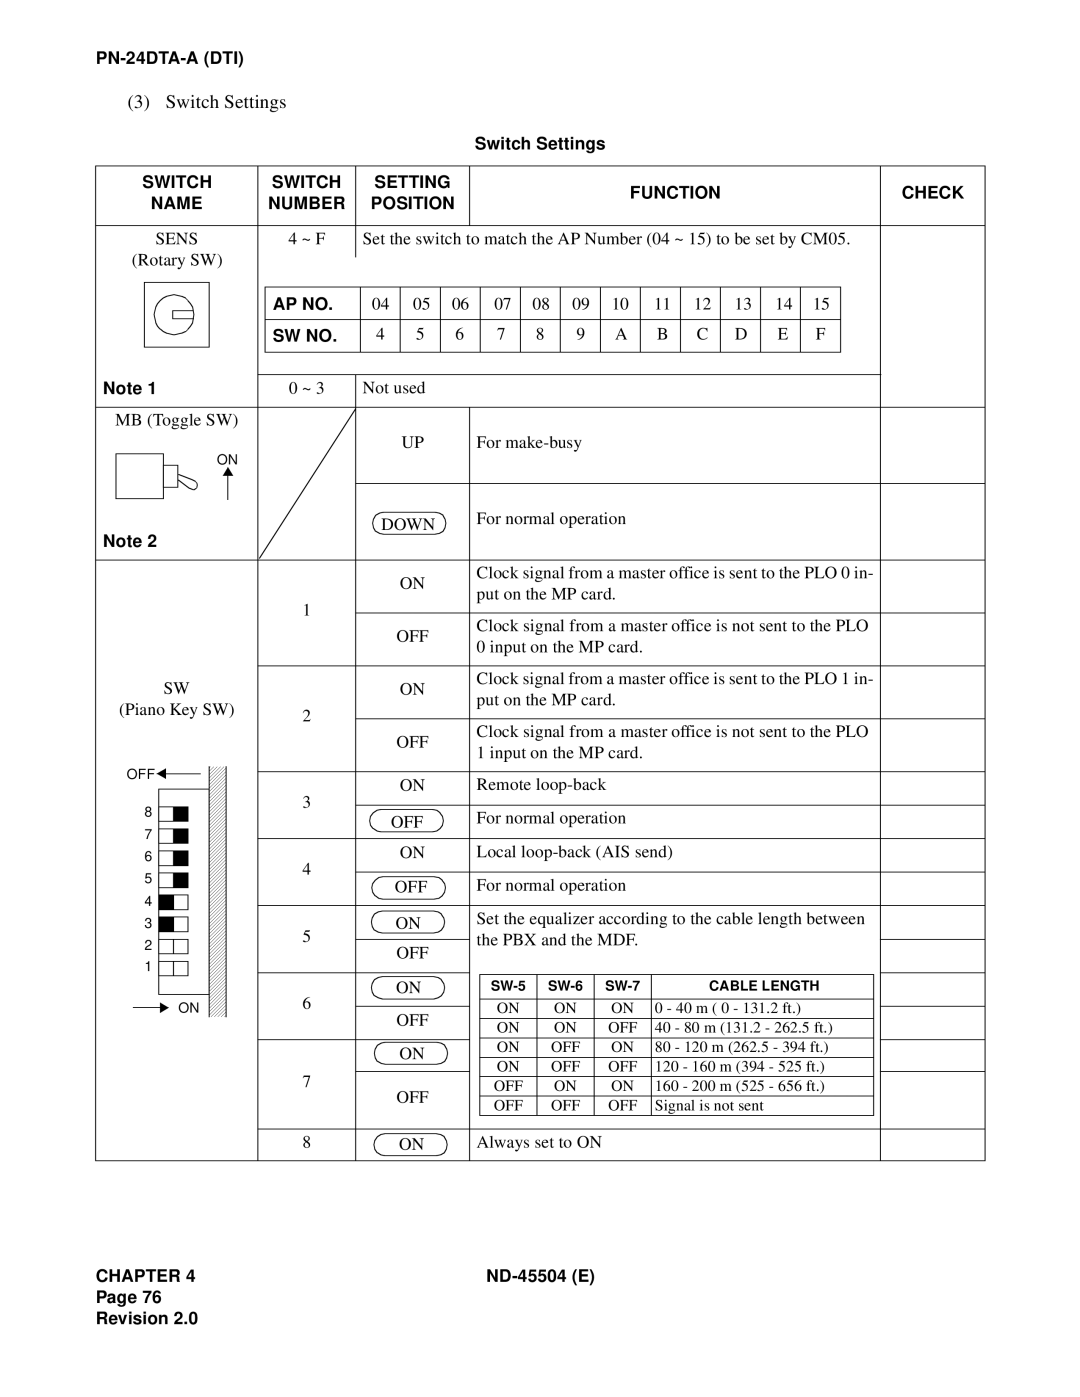 NEC 2000 IVS manual Switch Settings, PN-24DTA-ADTI 